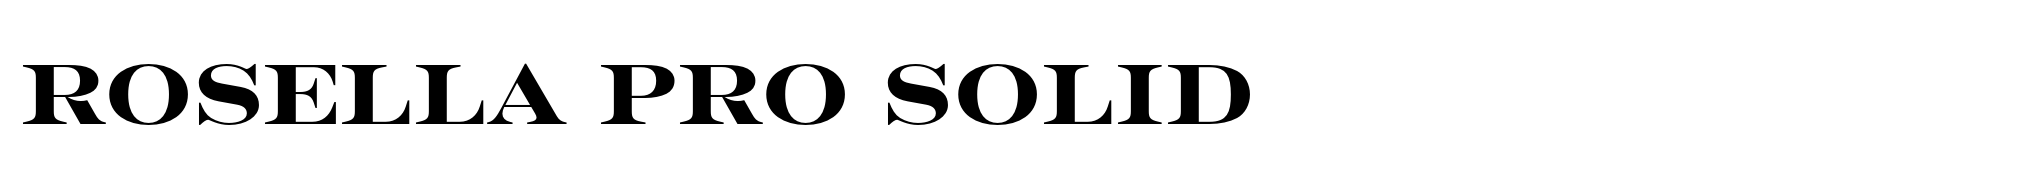 Rosella Pro Solid image